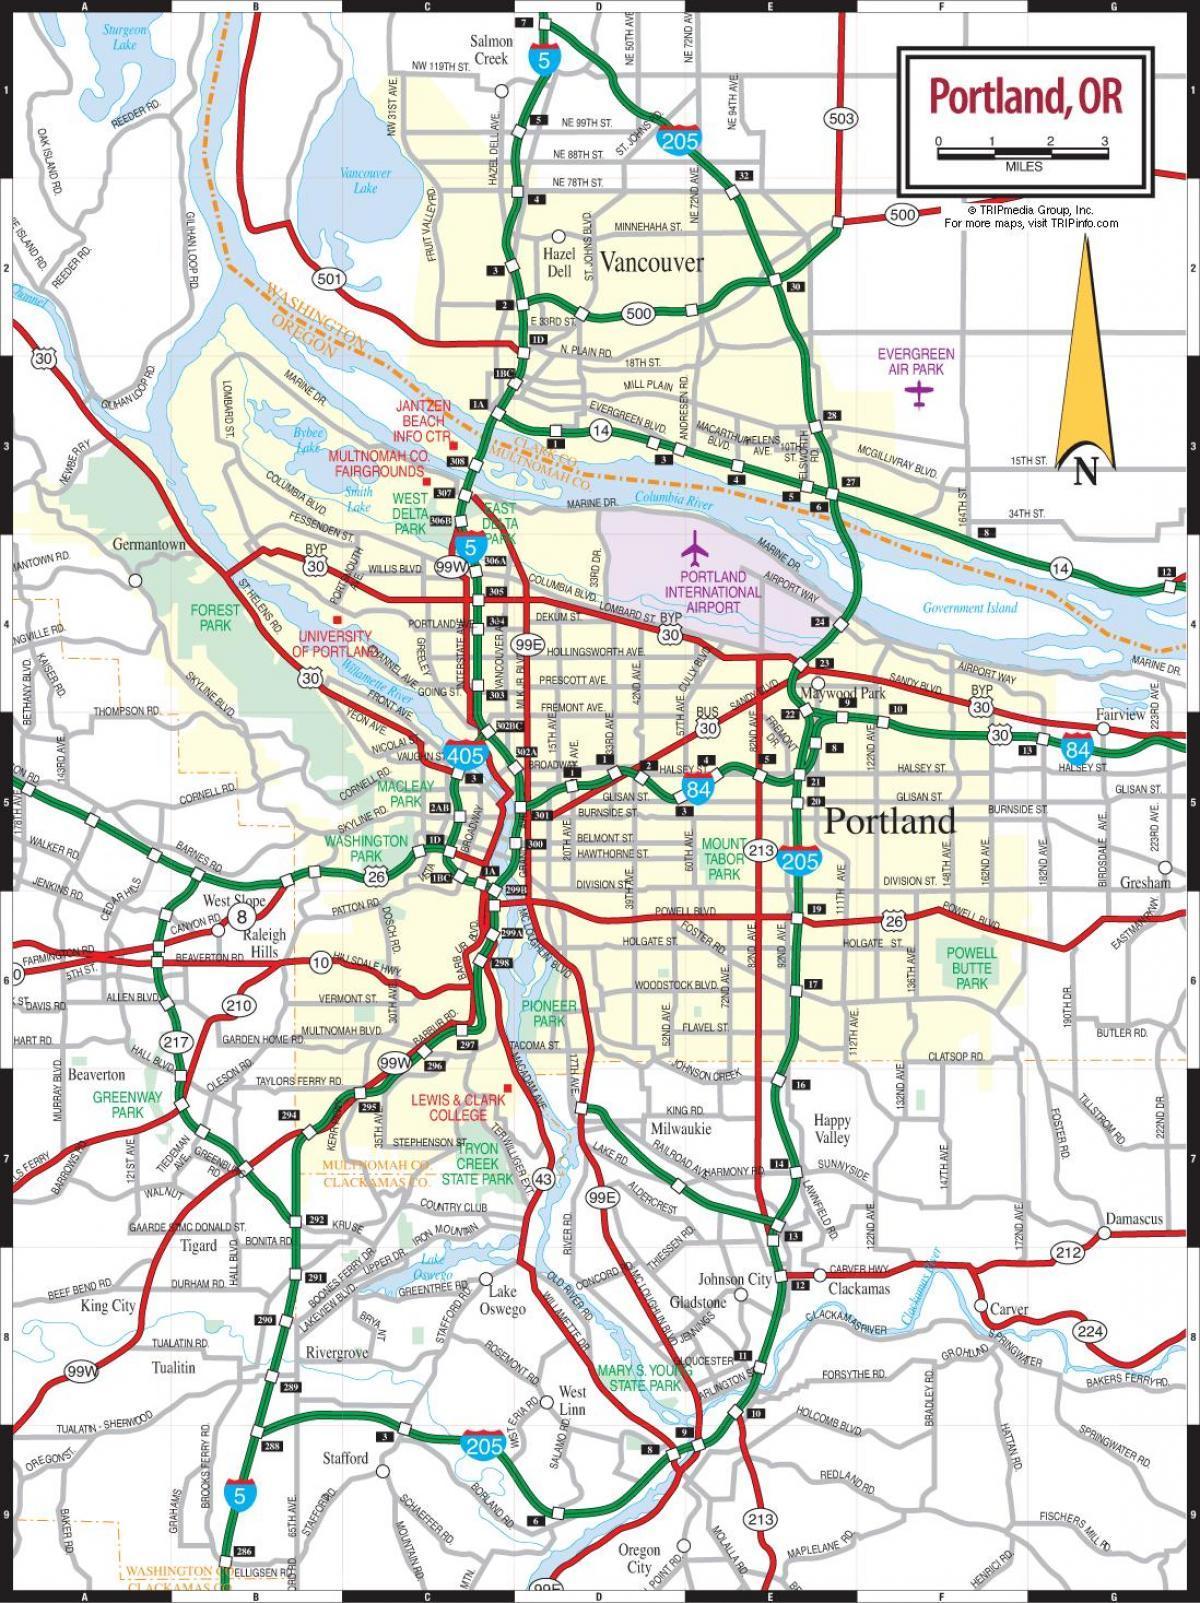 kort over Portland metro-området